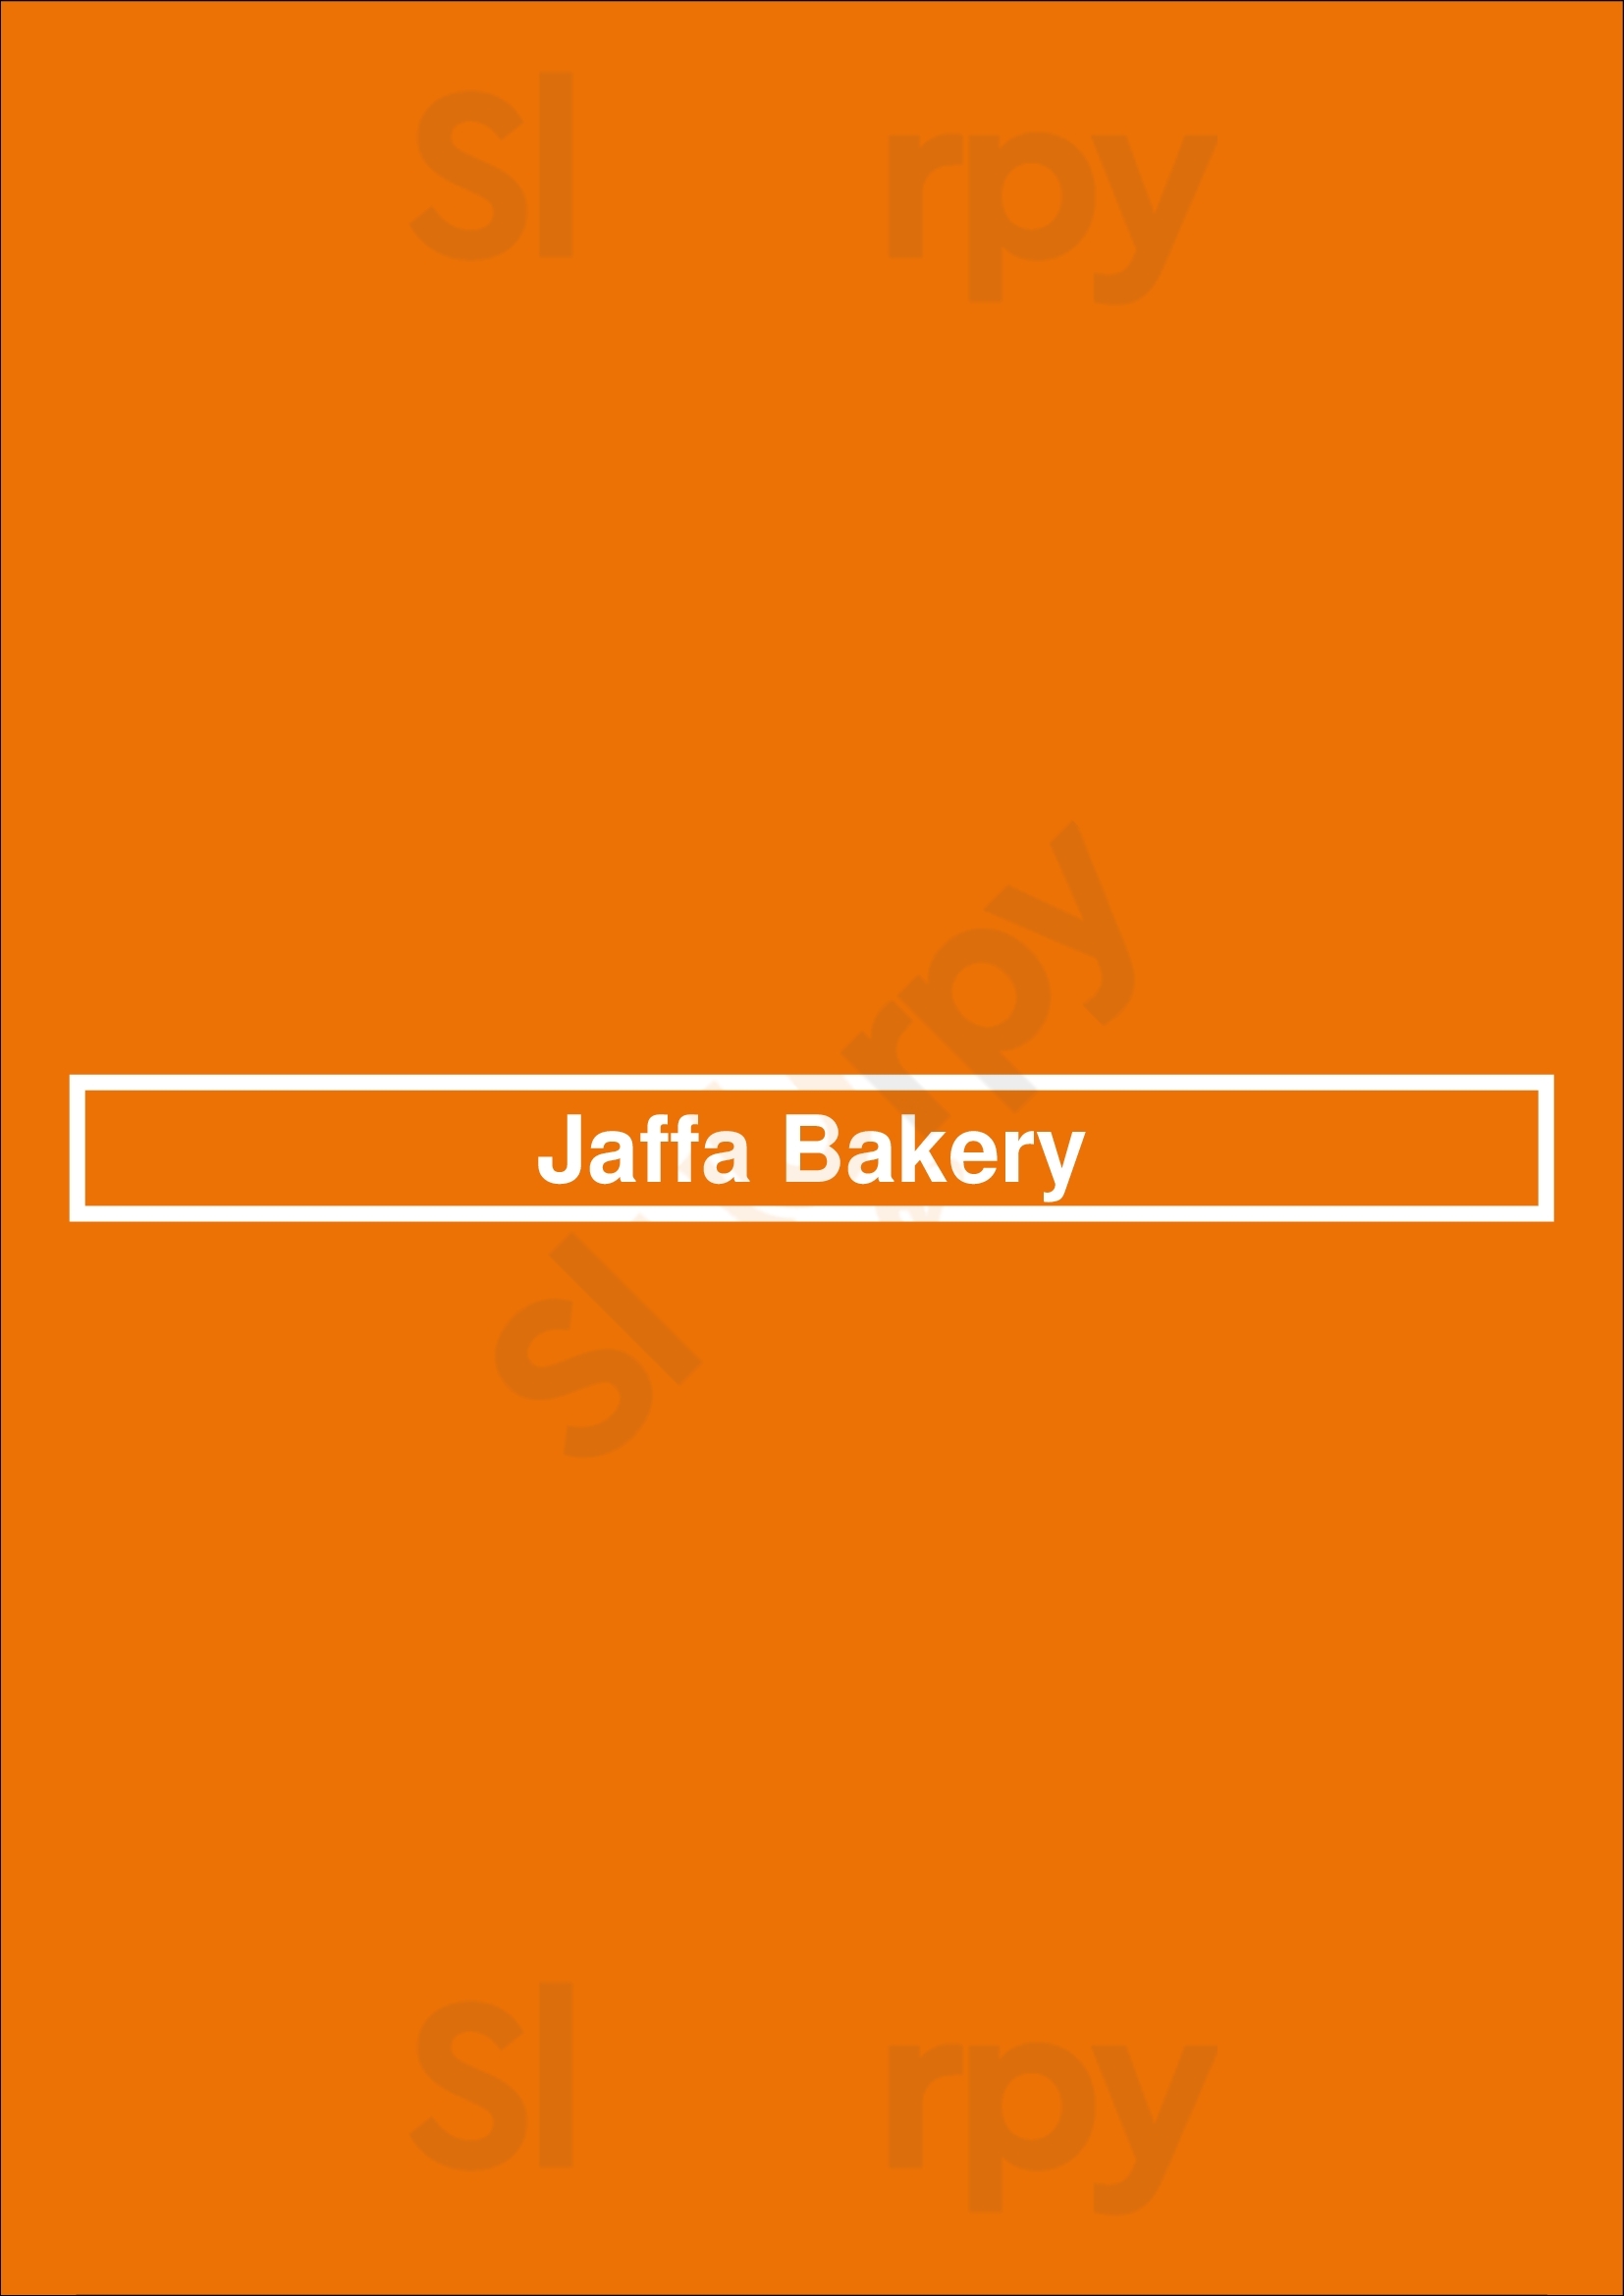 Jaffa Bakery Chicago Menu - 1